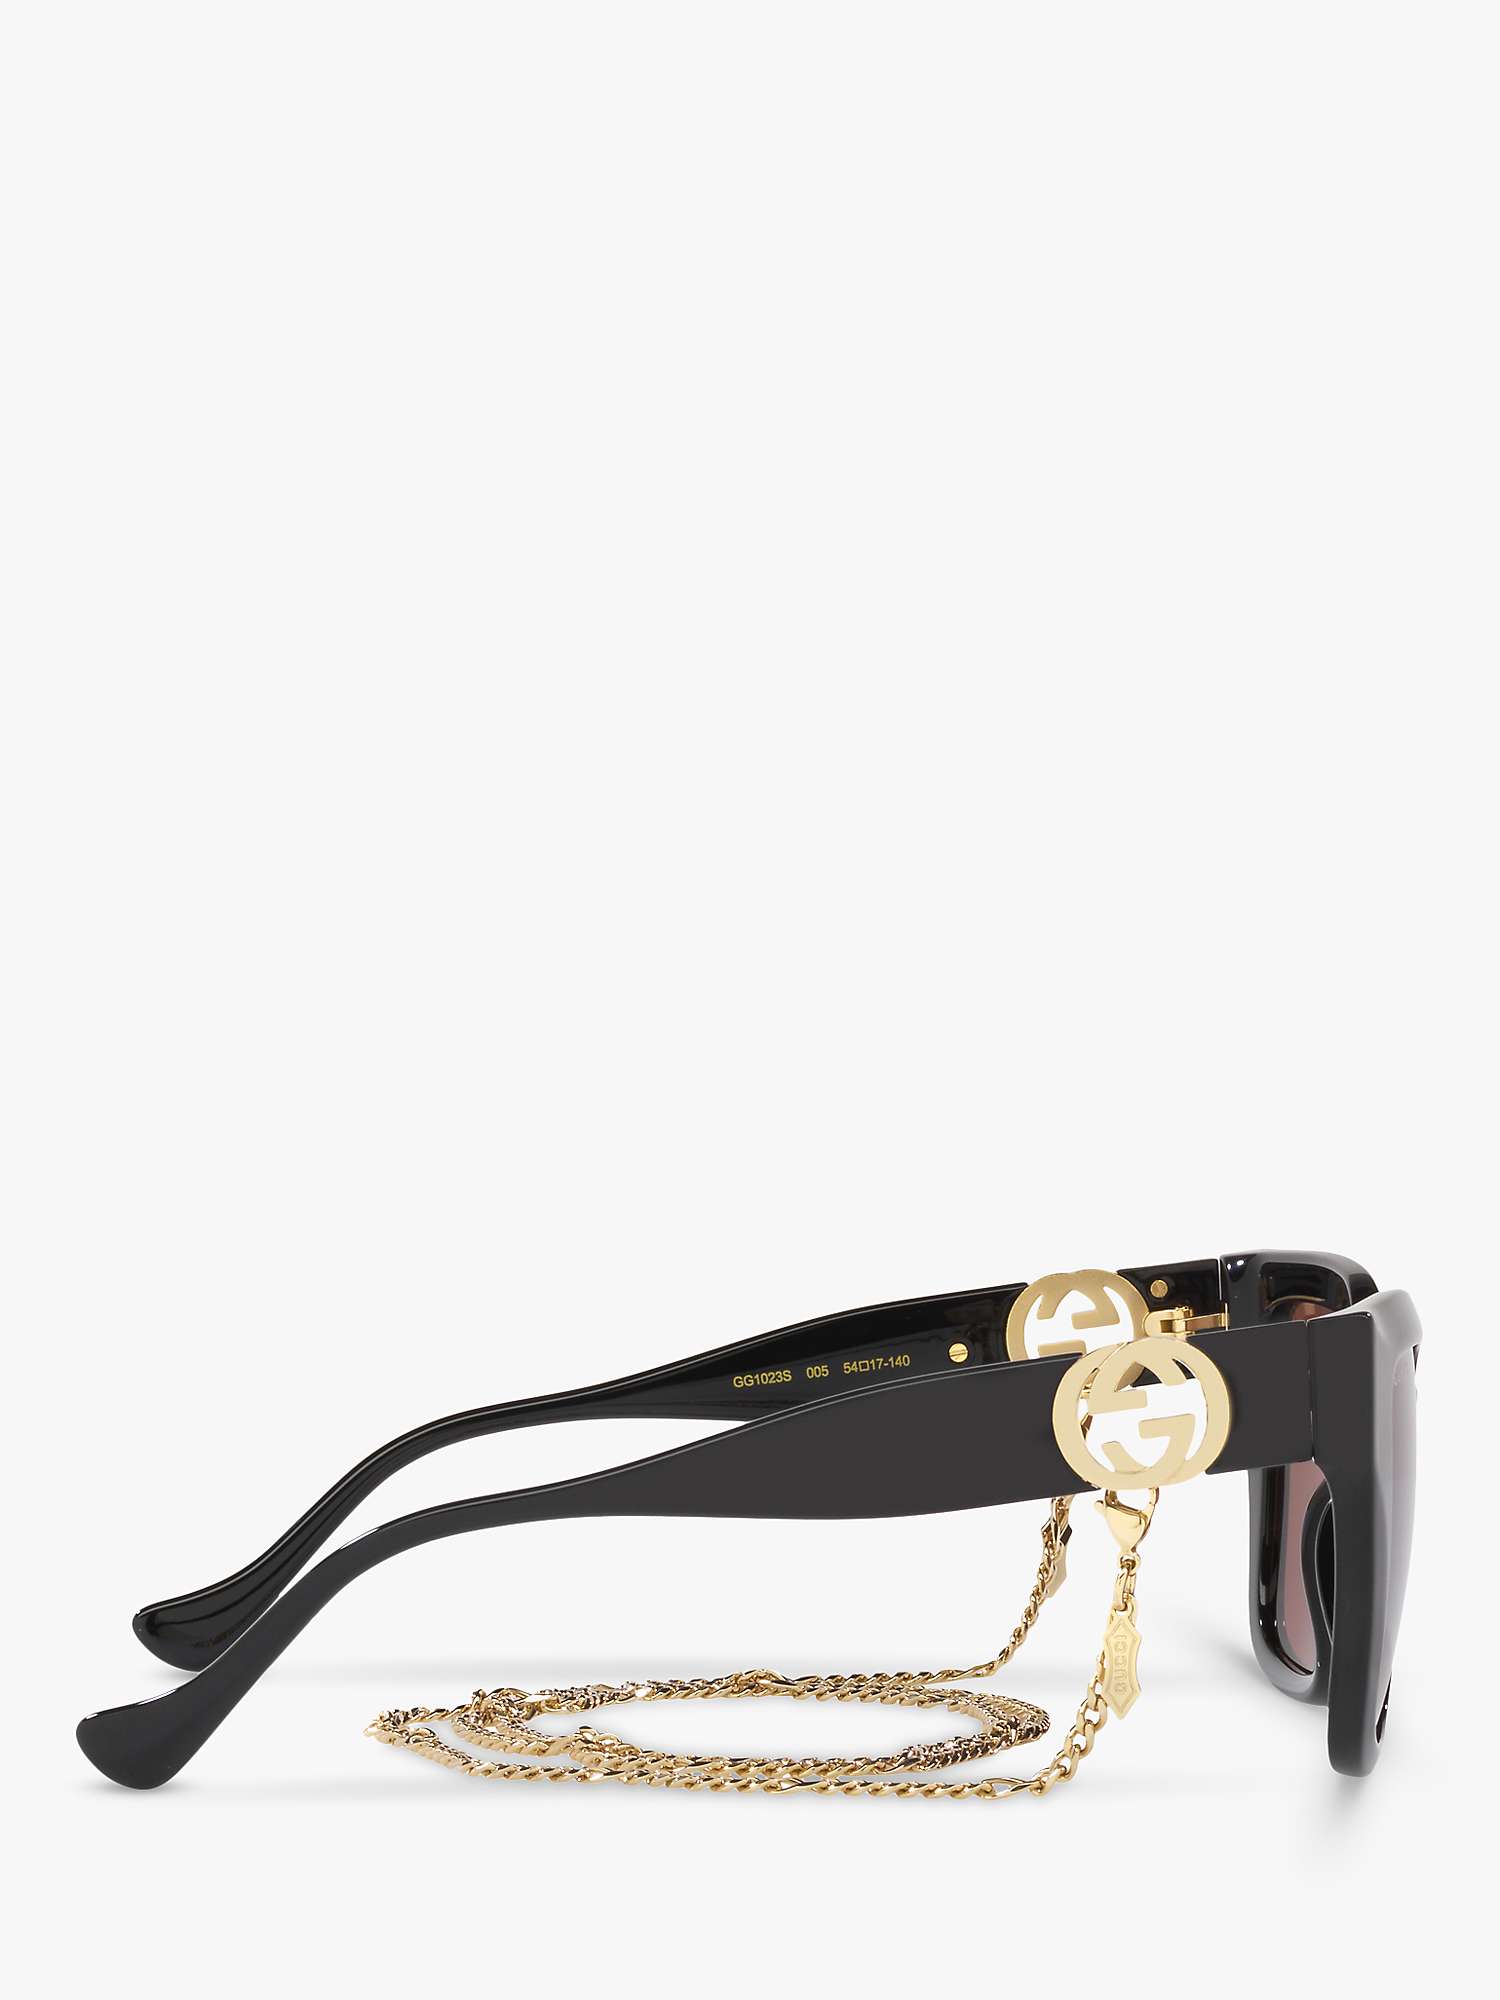 Buy Gucci GG1023S Women's D-Frame Sunglasses, Black/Brown Online at johnlewis.com